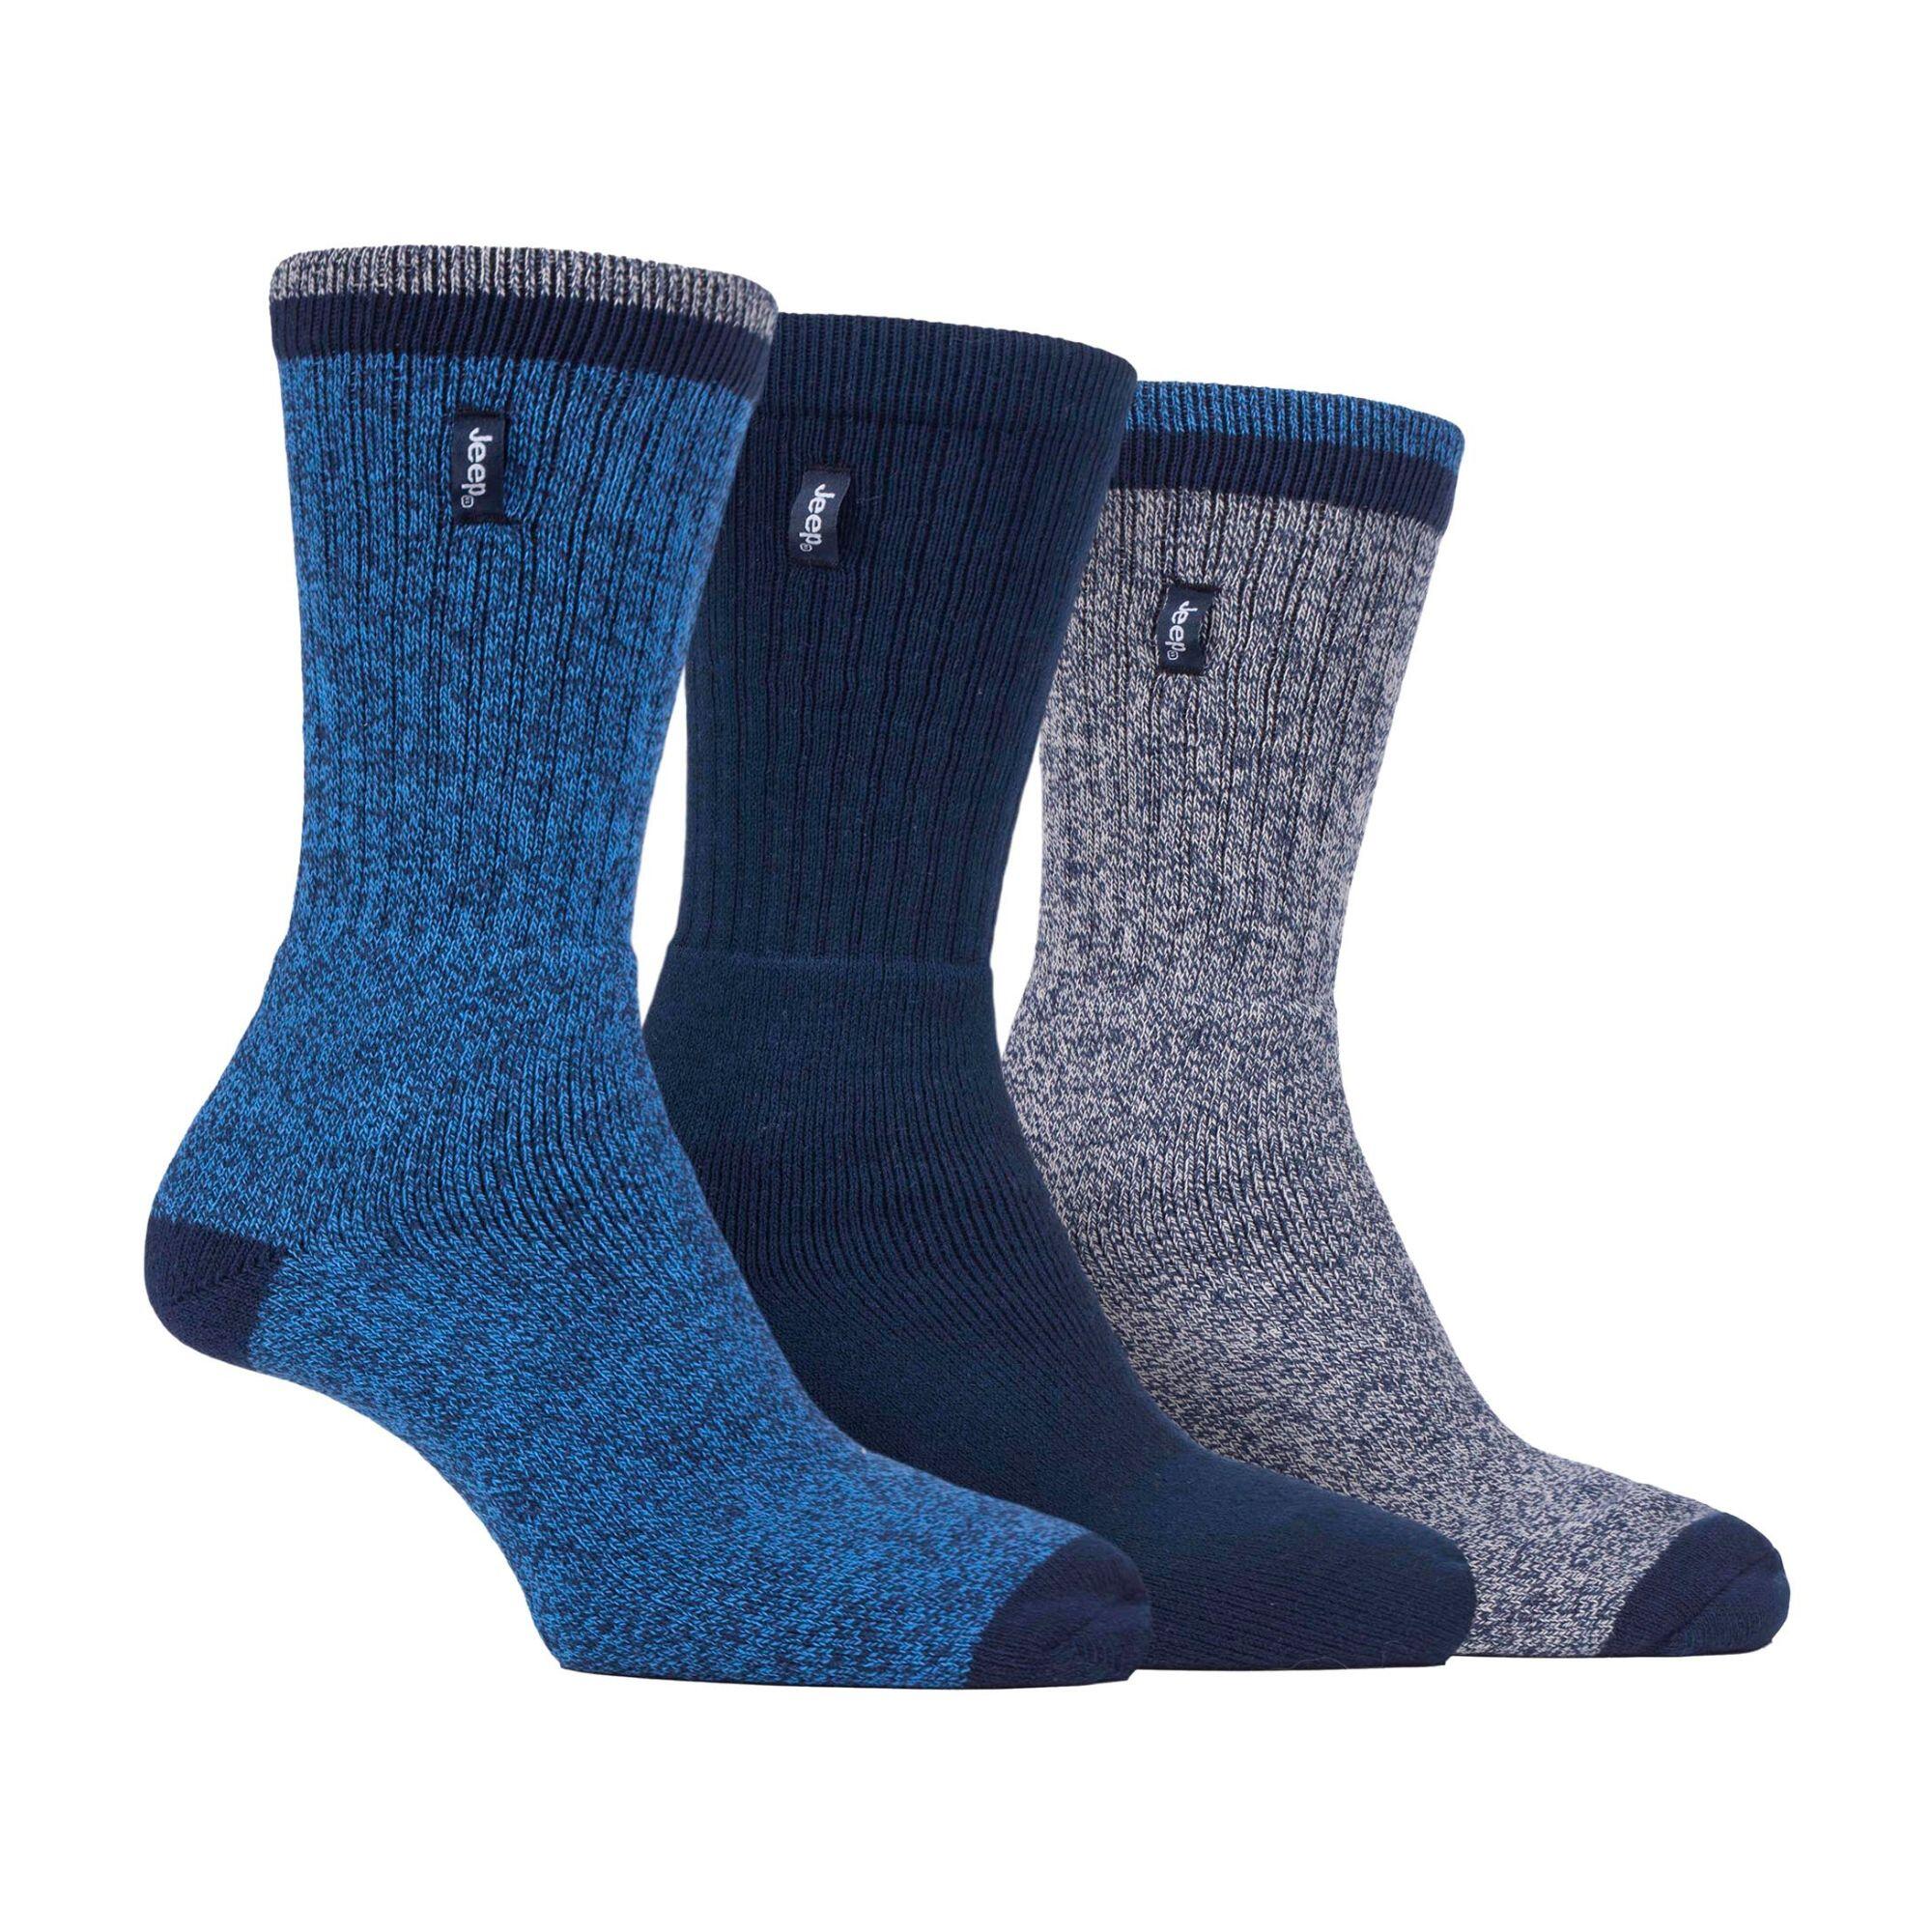 JEEP Mens Walking Breathable Ribbed Design Boot Socks